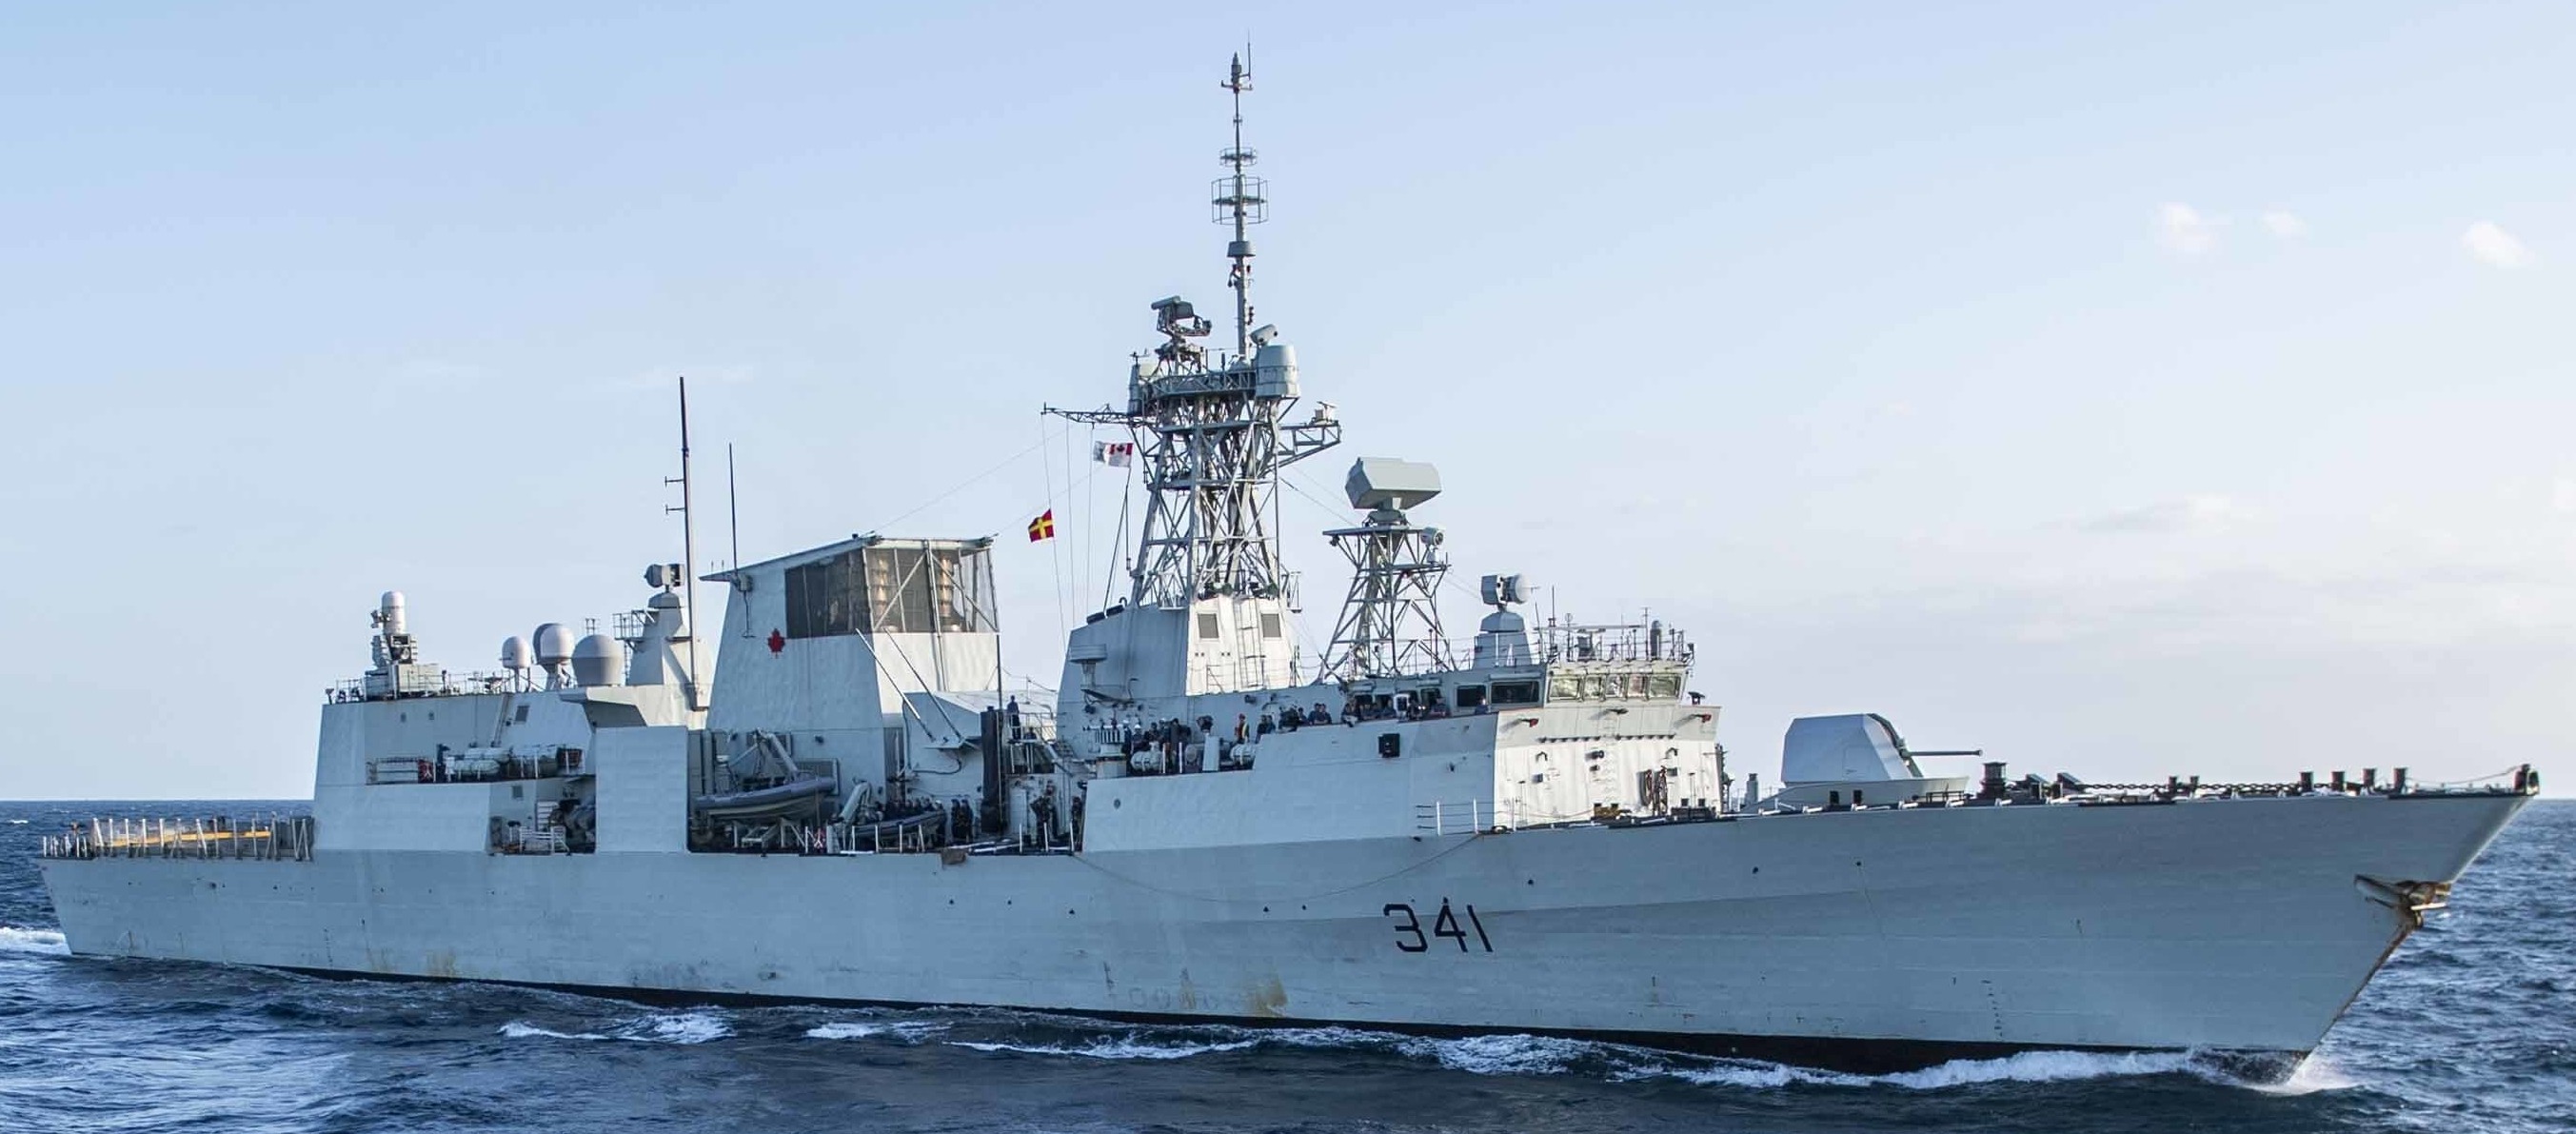 ffh-441 hmcs ottawa halifax class helicopter patrol frigate ncsm royal canadian navy 19